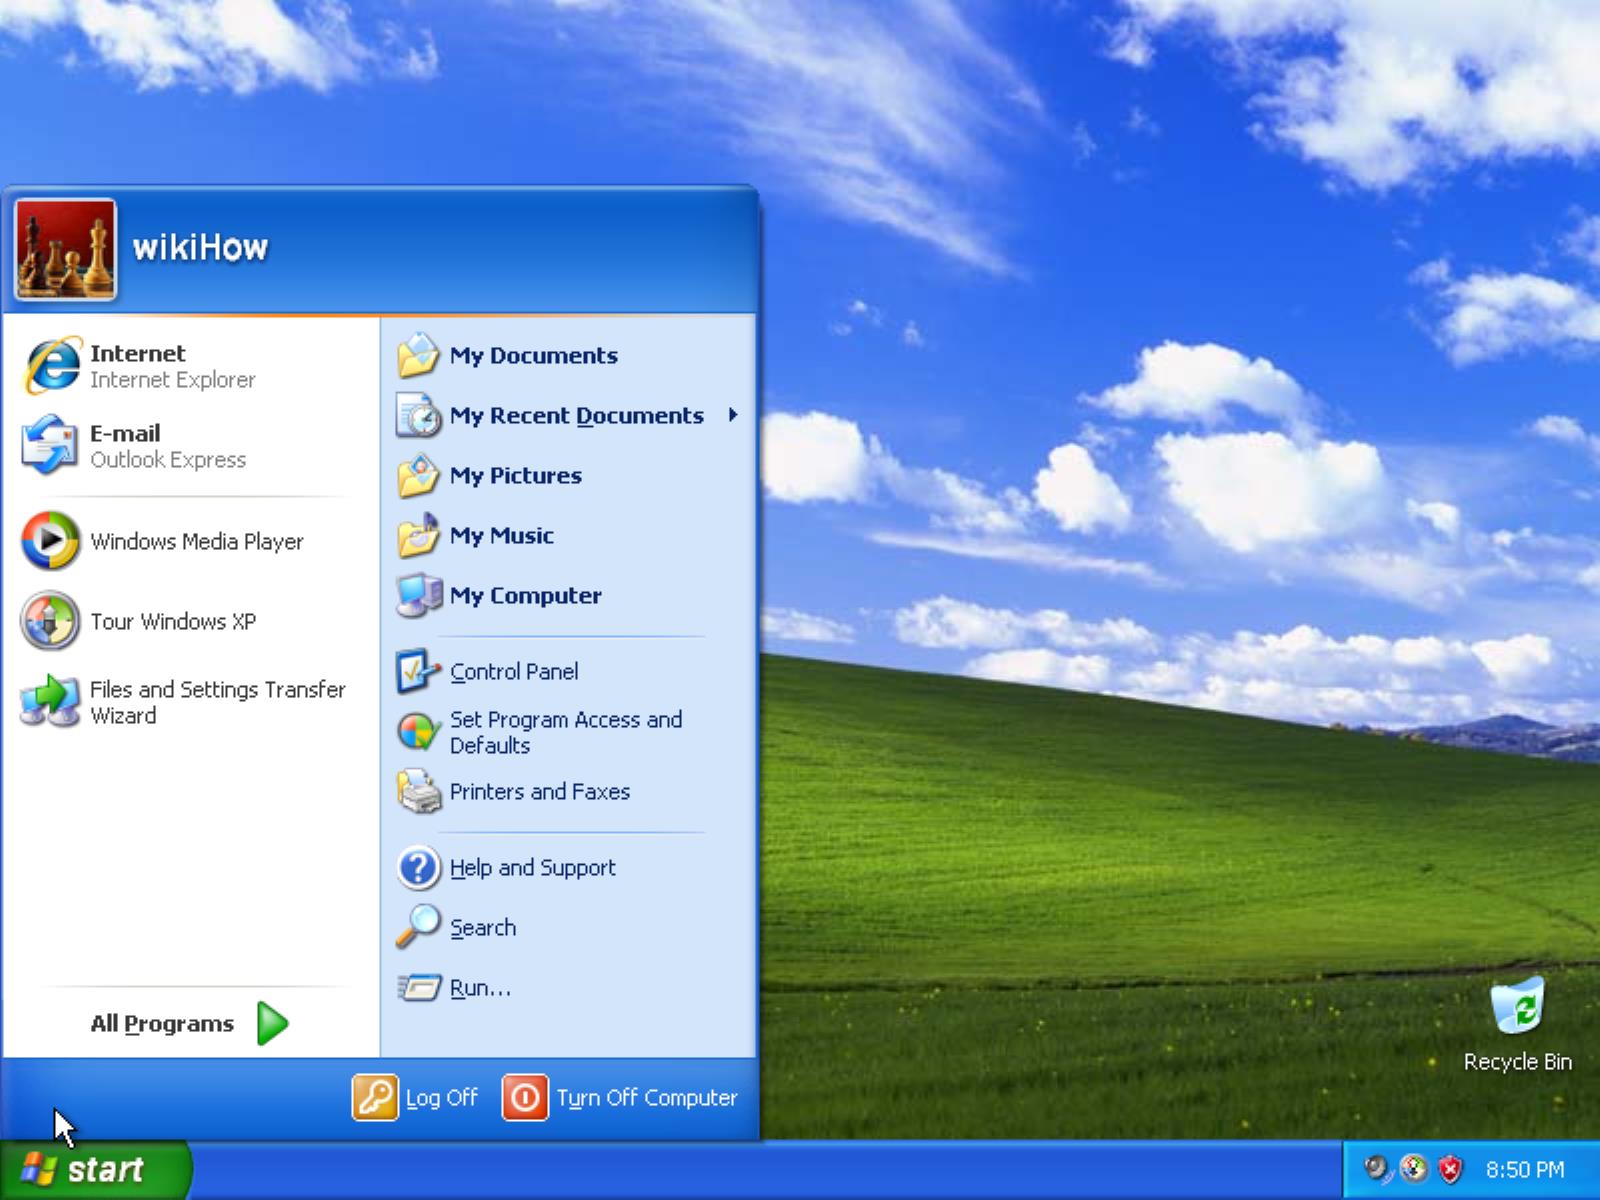 Windows XP Professional 